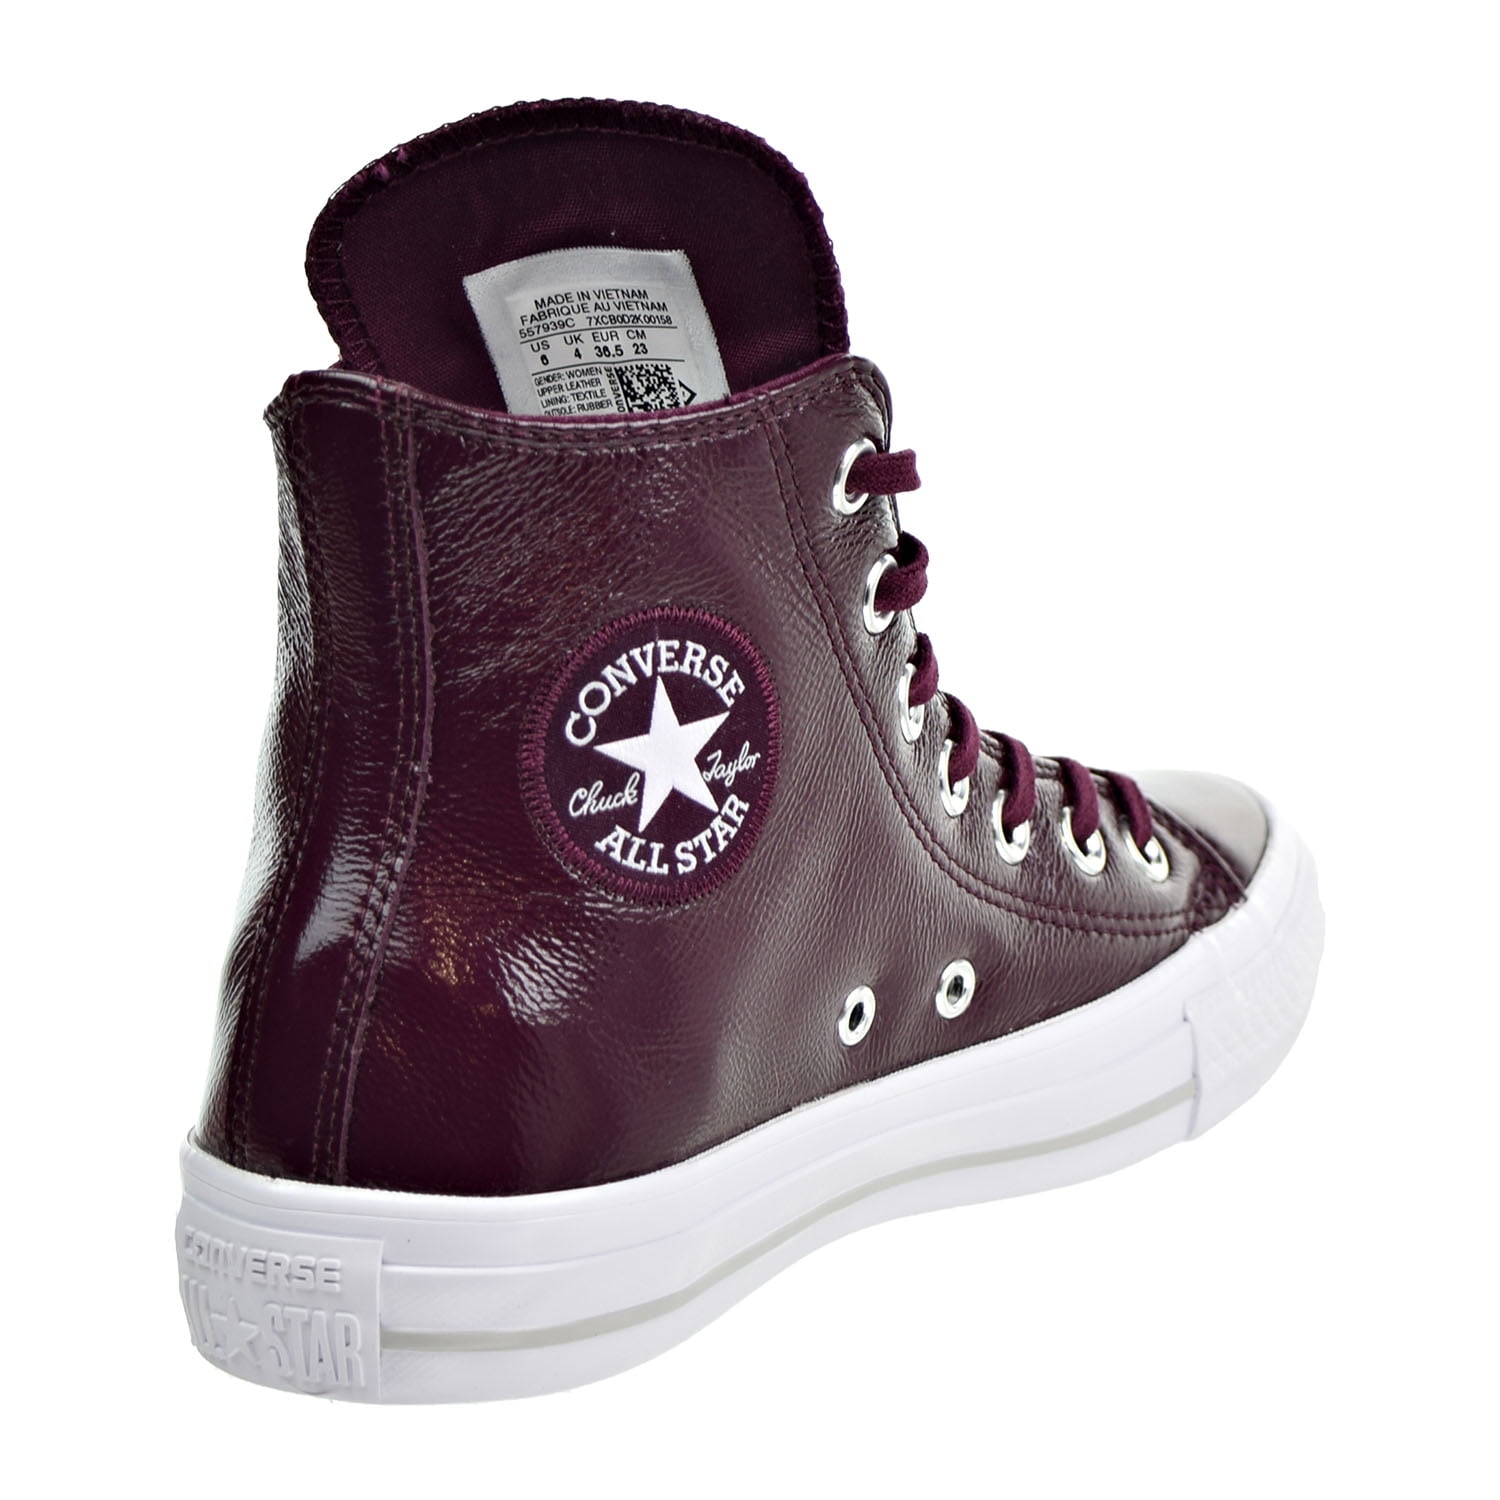 Extremistas malta foso Converse Chuck Taylor All Star High Top Women's Shoes Dark Sangria 557939c  - Walmart.com